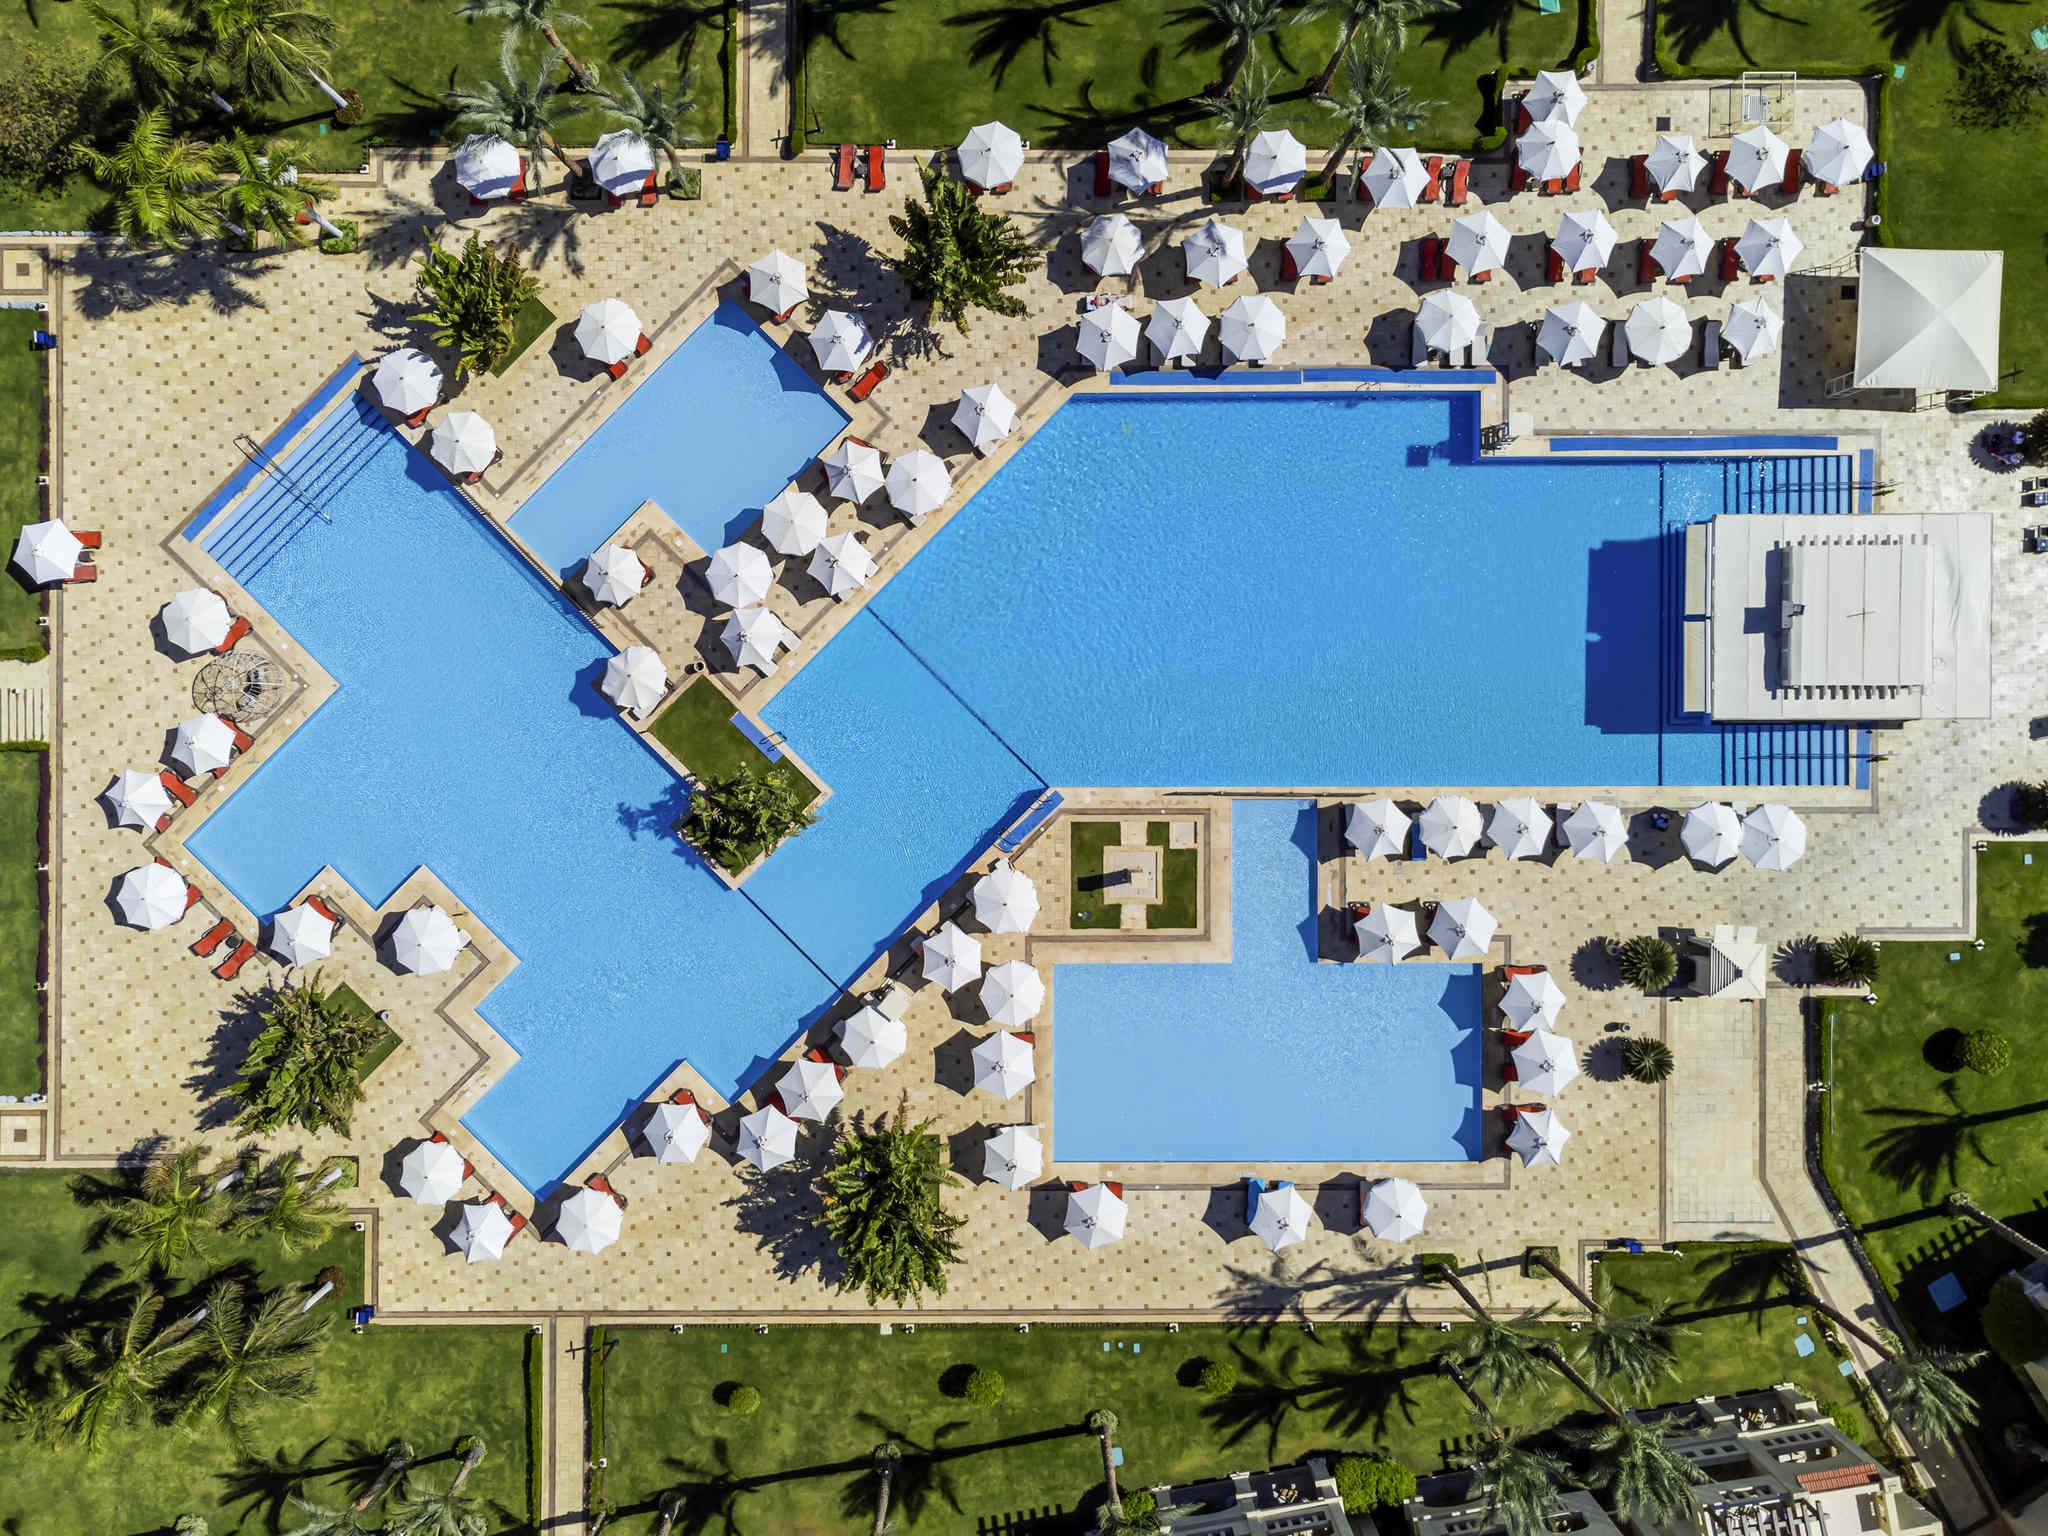 Rixos Sharm El Sheikh Resort